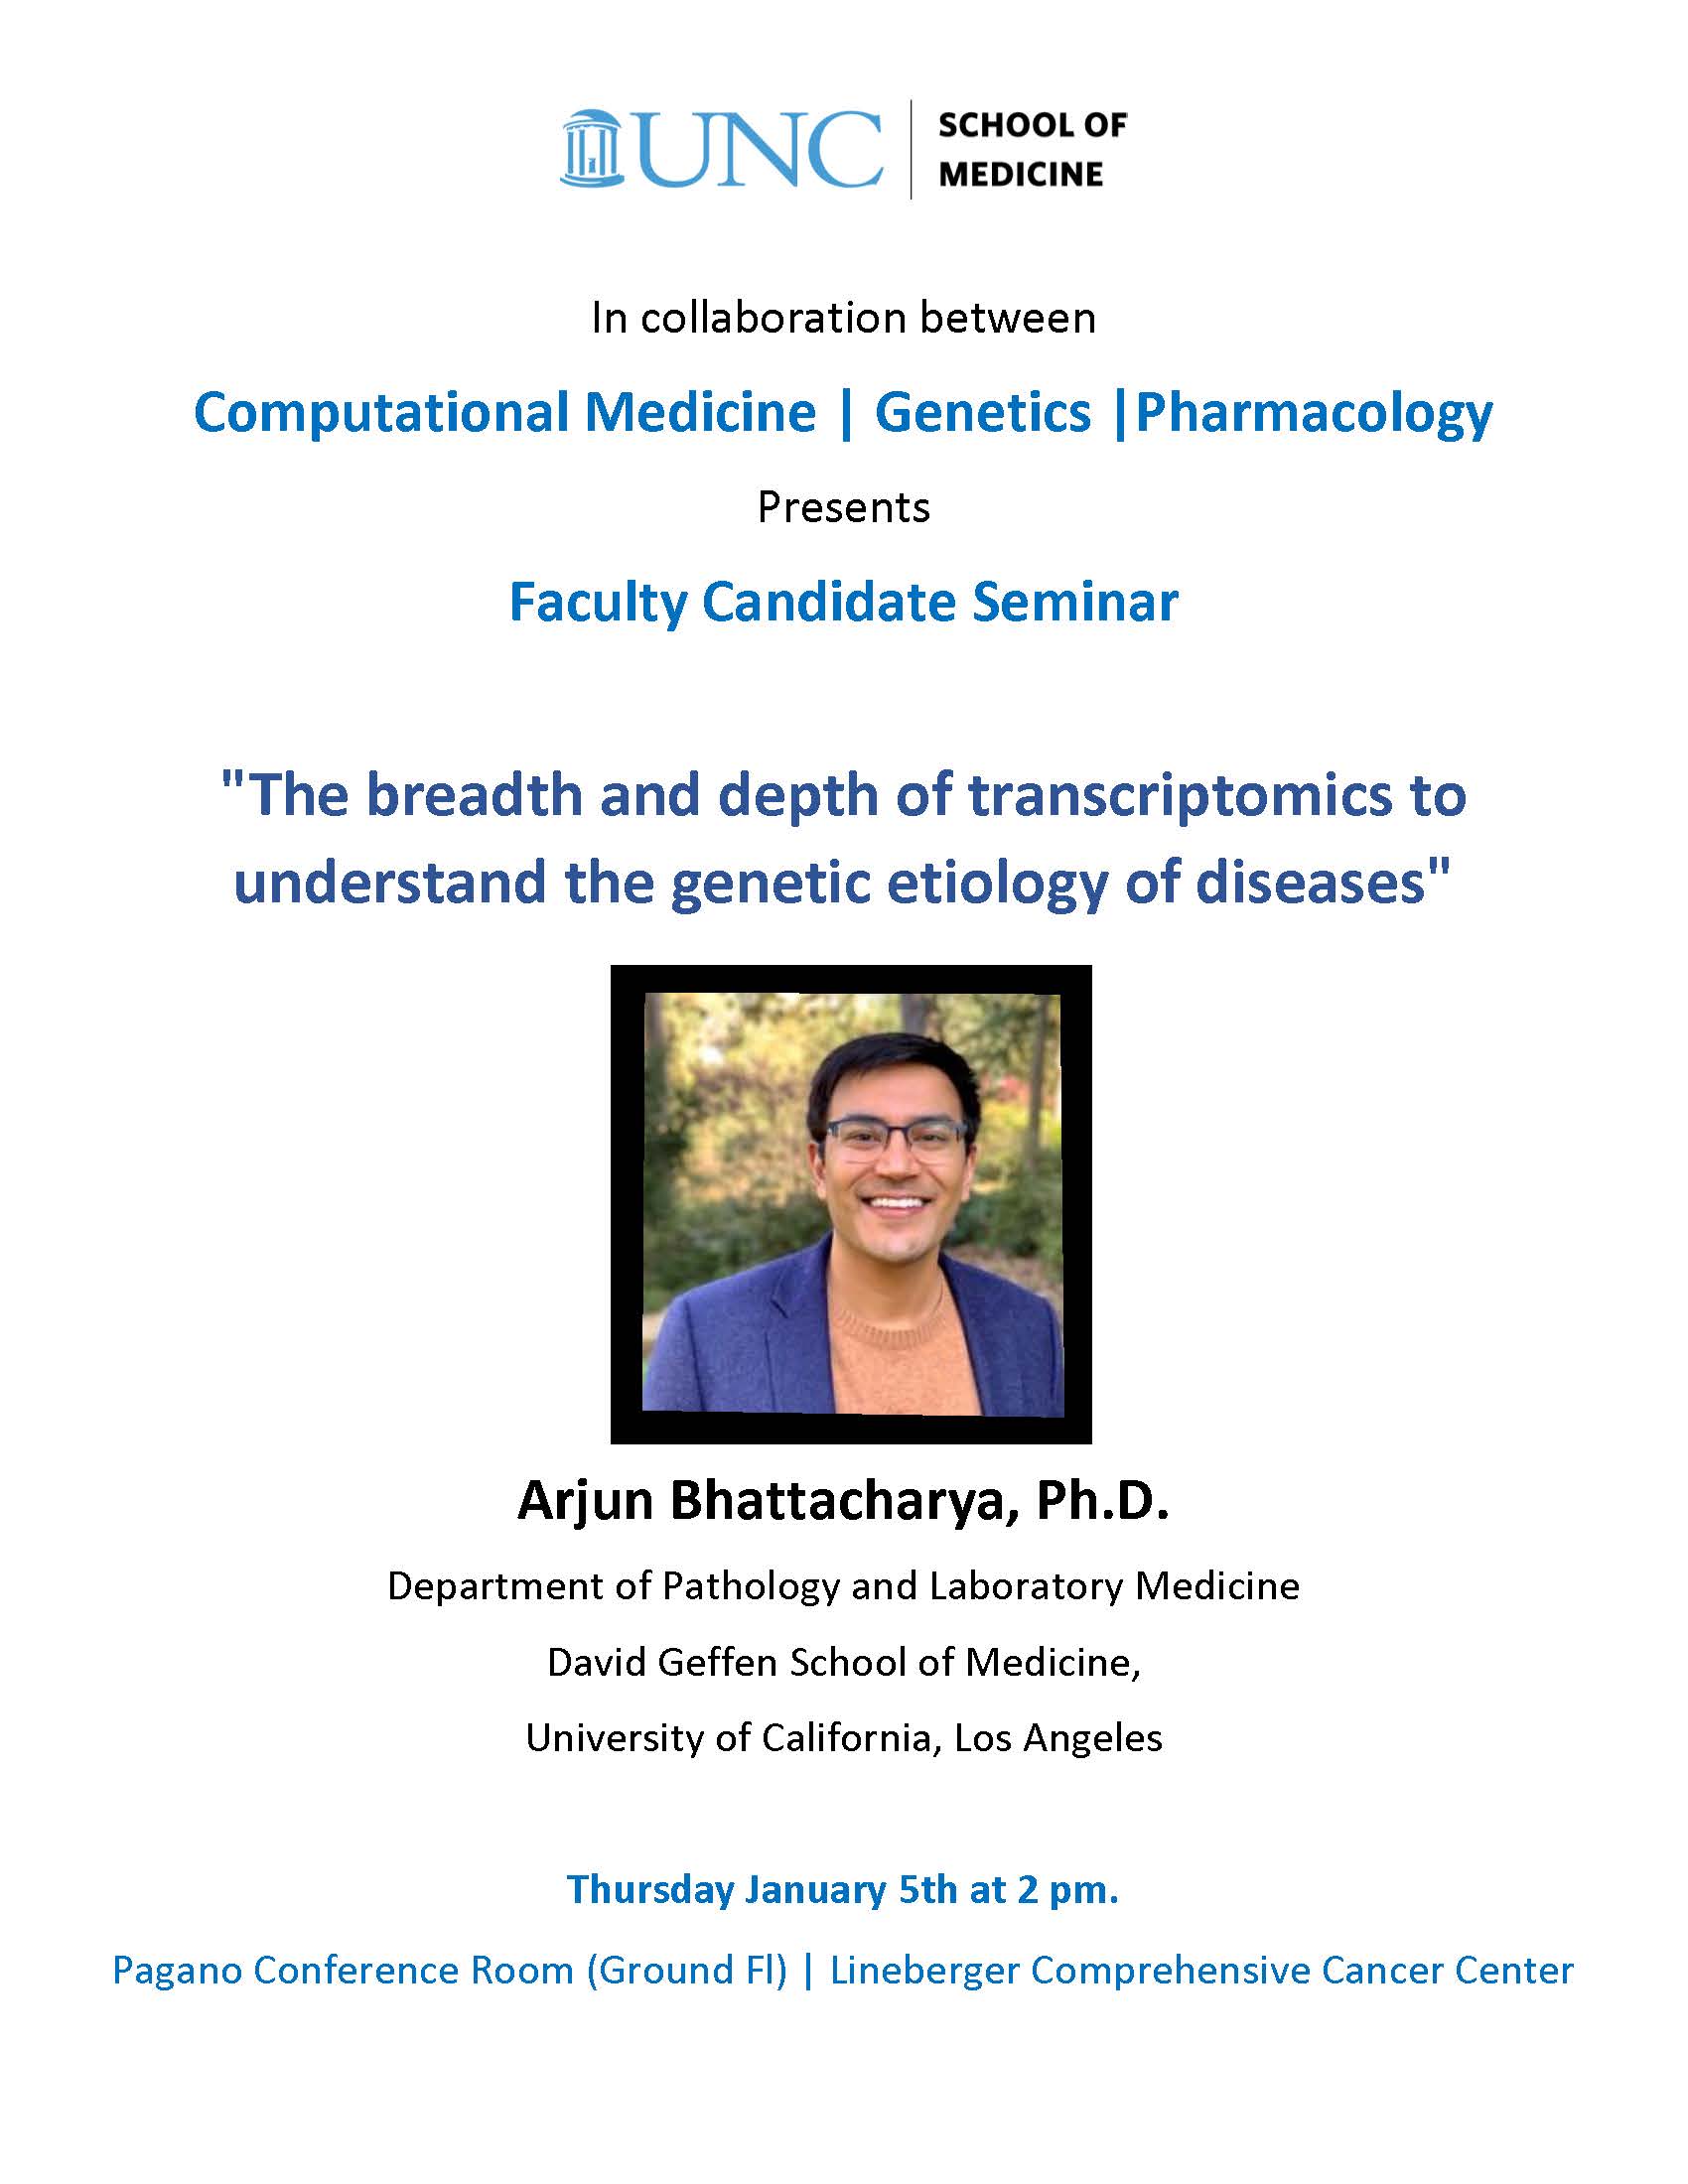 Computational Medicine Genetics Faculty Candidate Arjun Bhattacharya January 5 2023